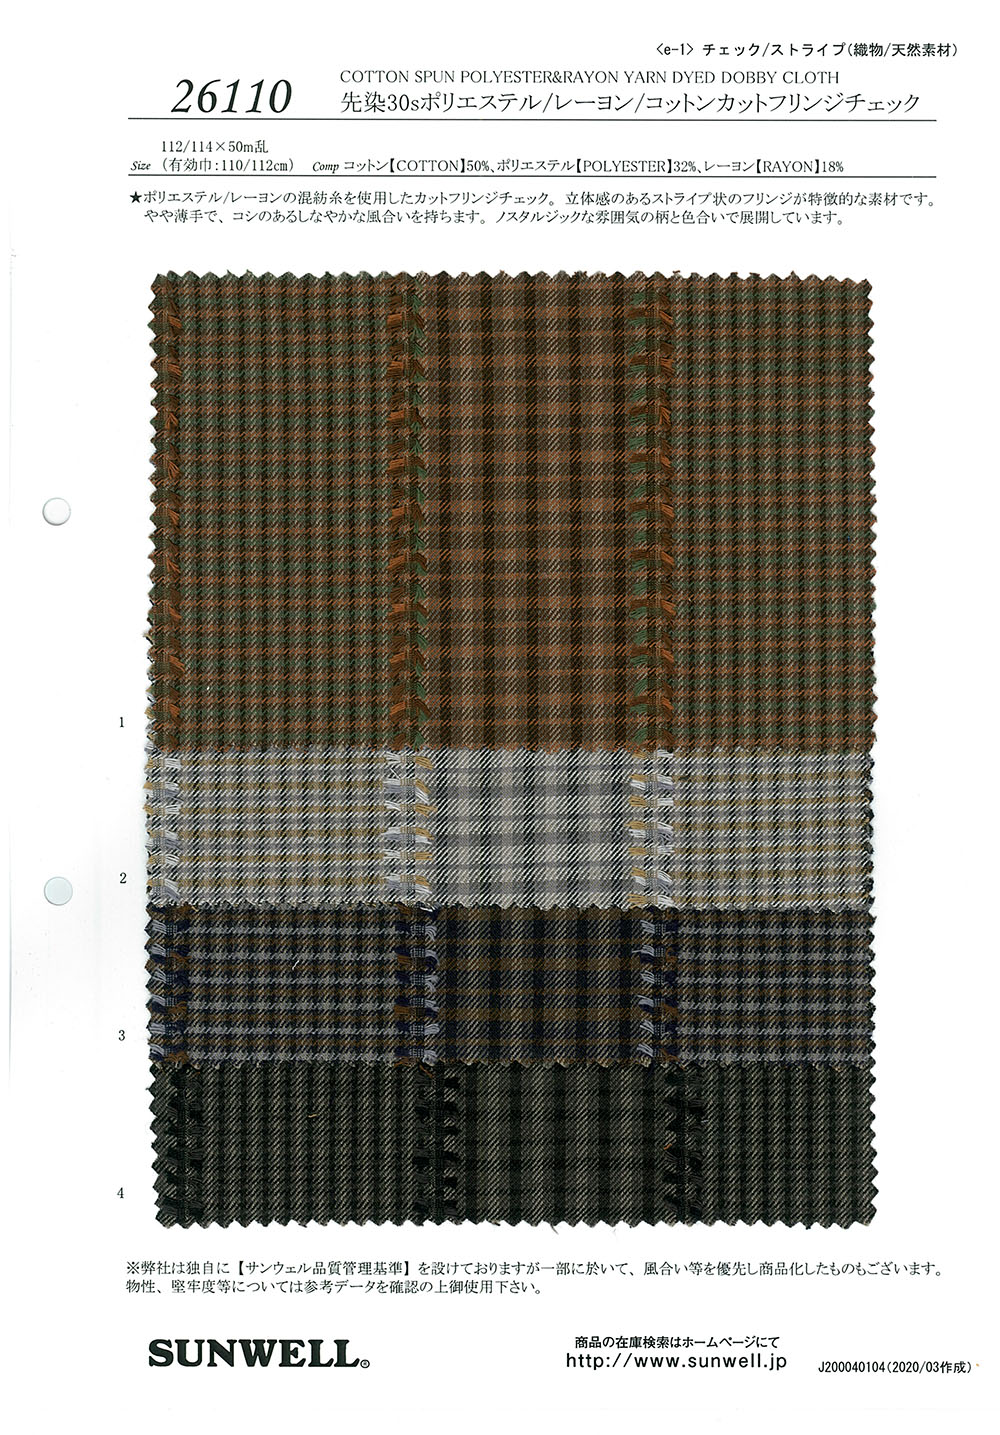 26110 Cheque Con Flecos Cortados En Poliéster/rayón/algodón De 30 Hilos Teñidos En Hilo[Fabrica Textil] SUNWELL